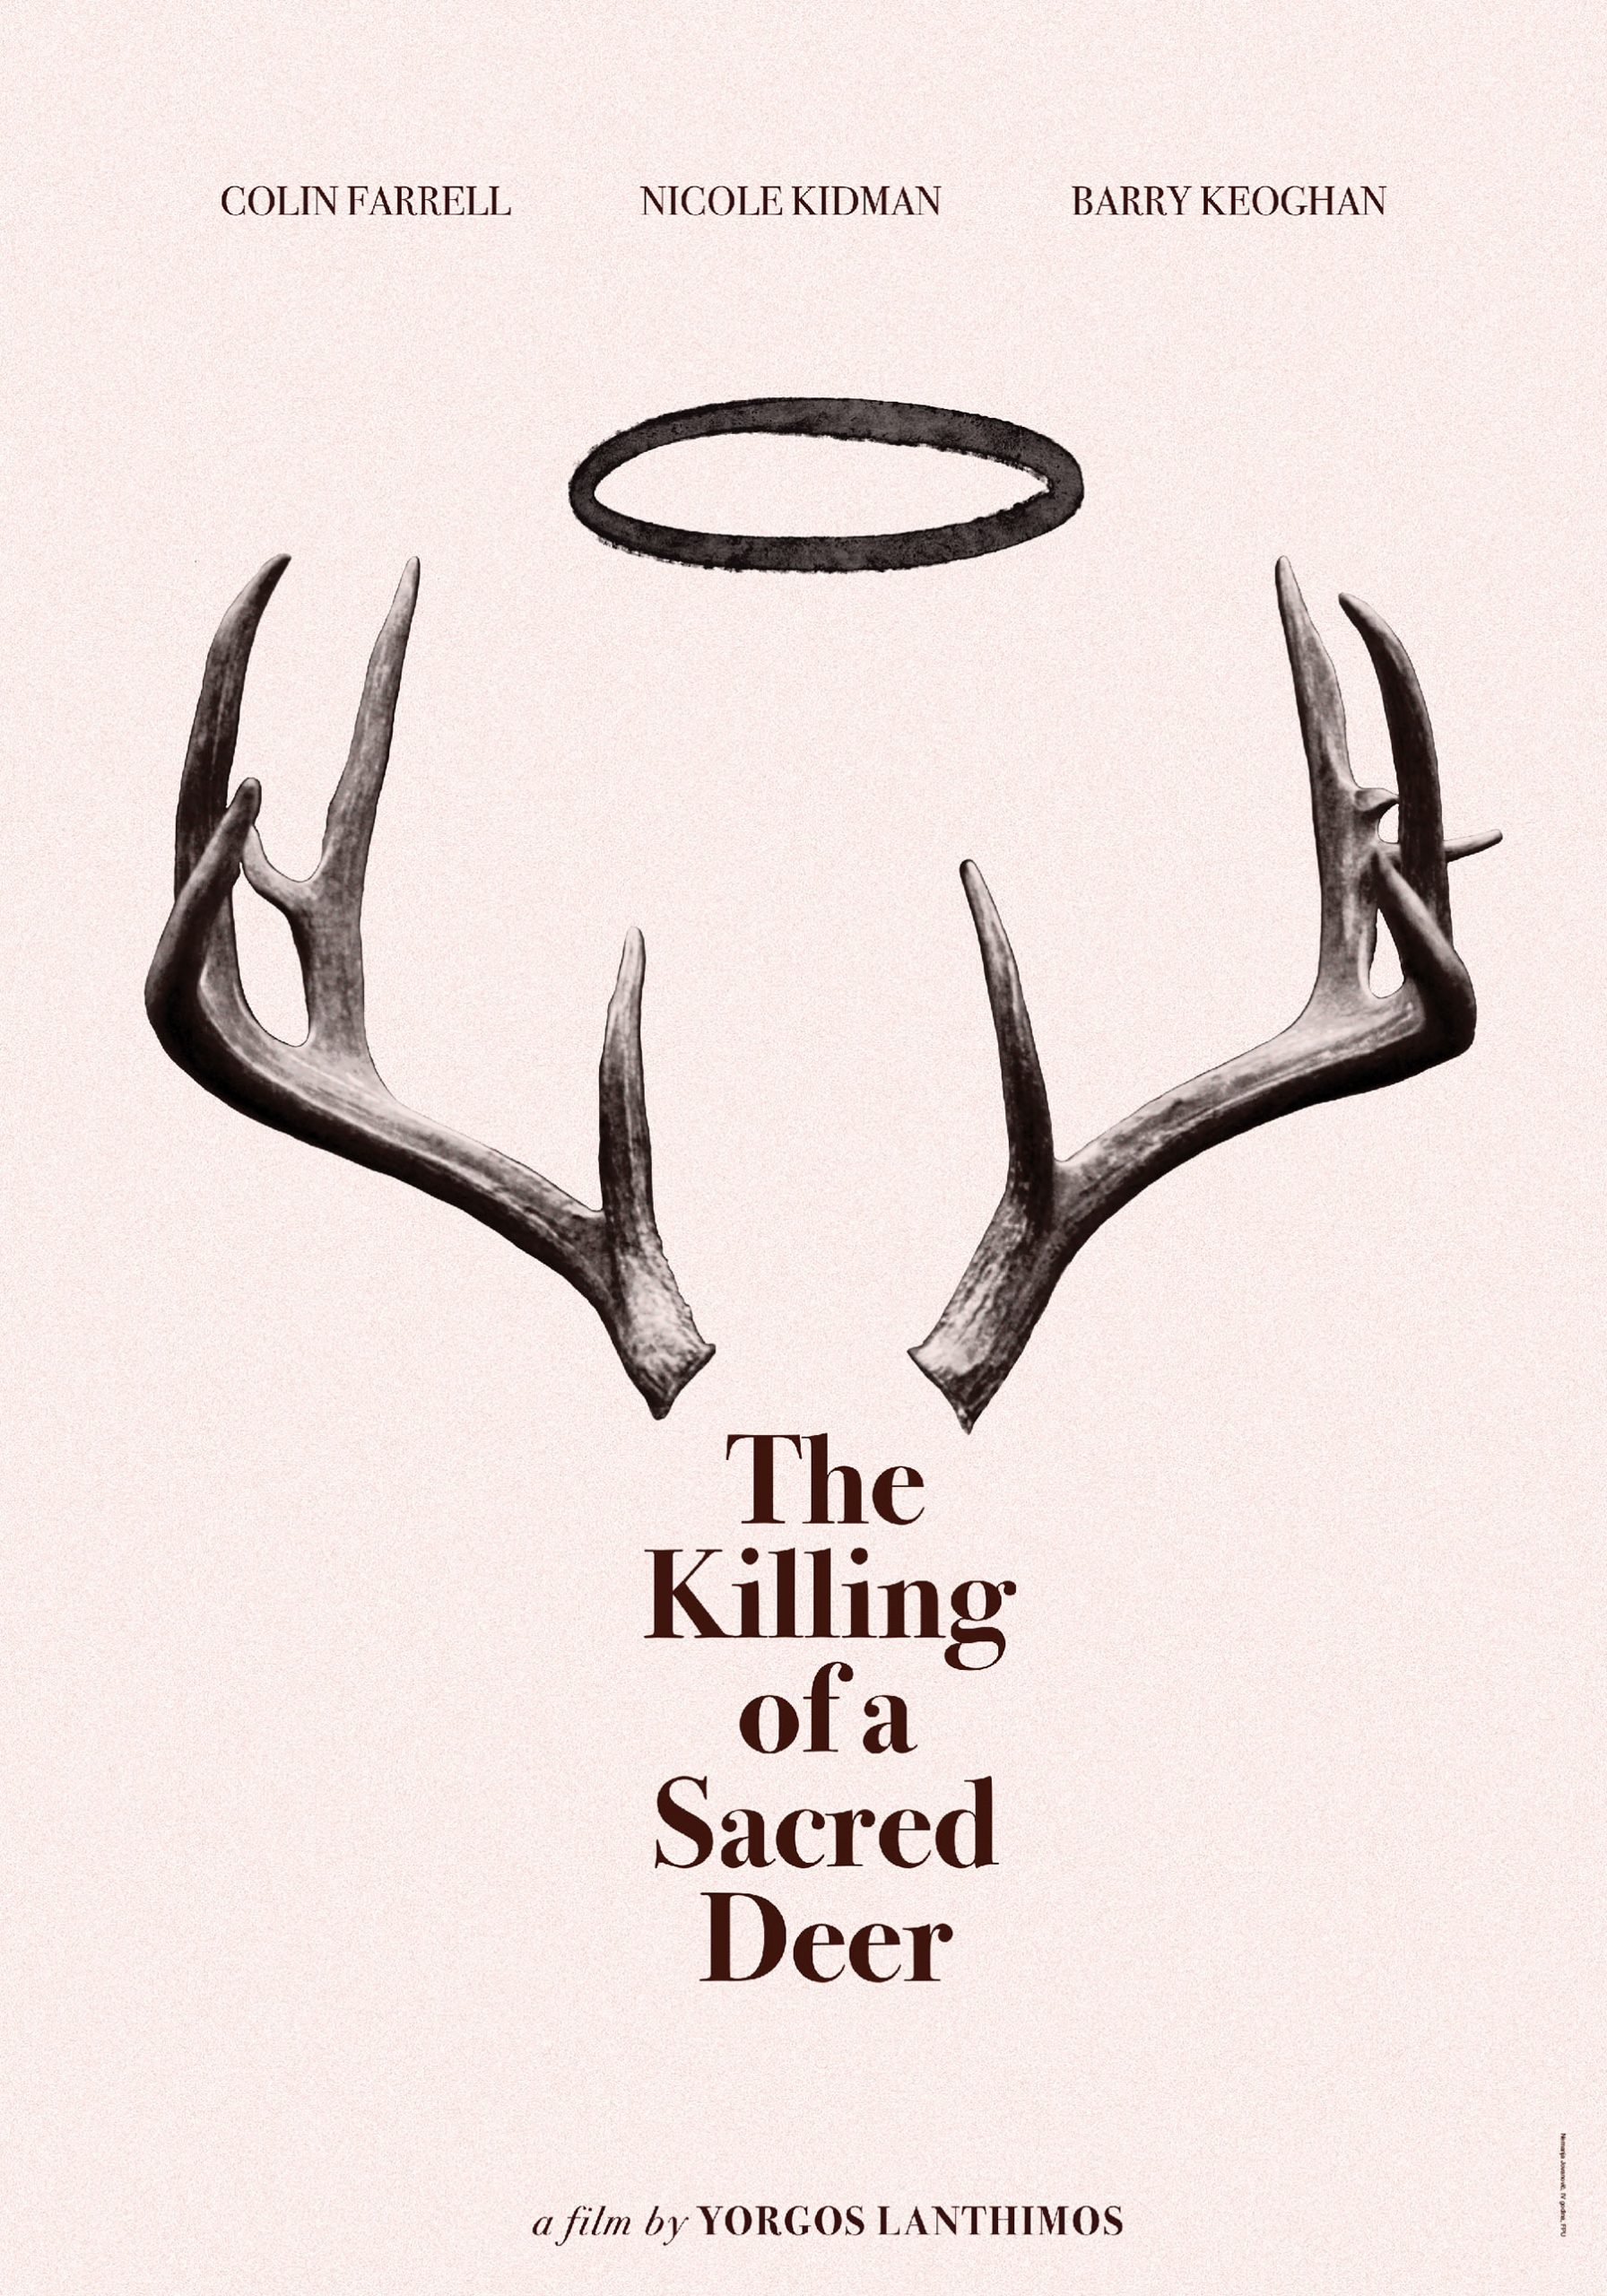 The killing of sacred deer